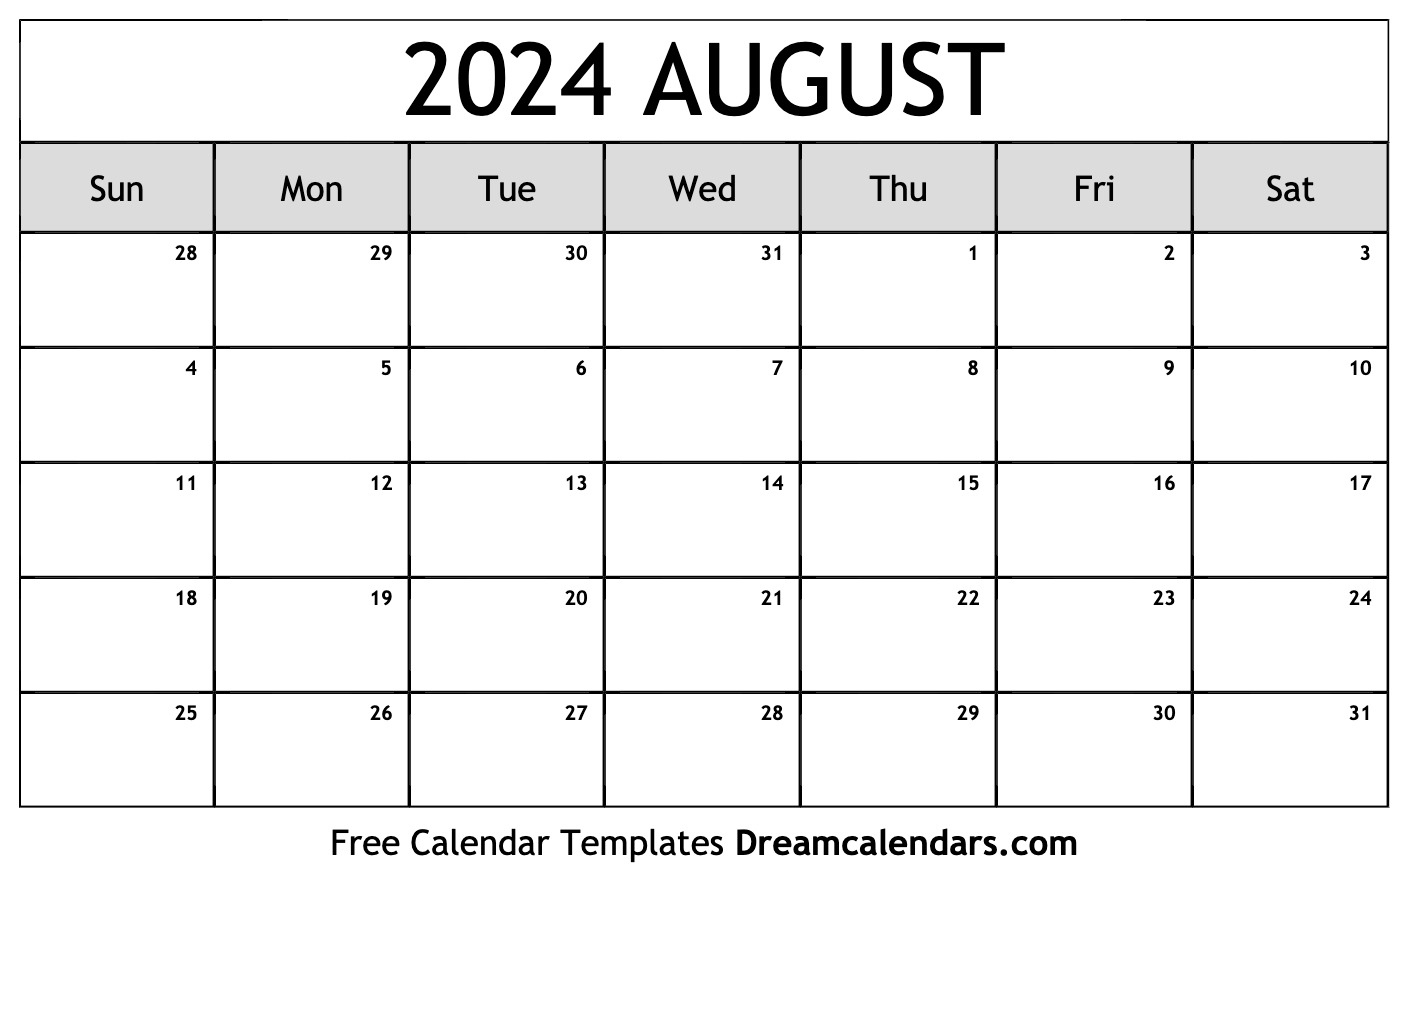 August 2024 Calendar | Free Blank Printable With Holidays regarding Free Printable Black And White Calendar Aug 2024